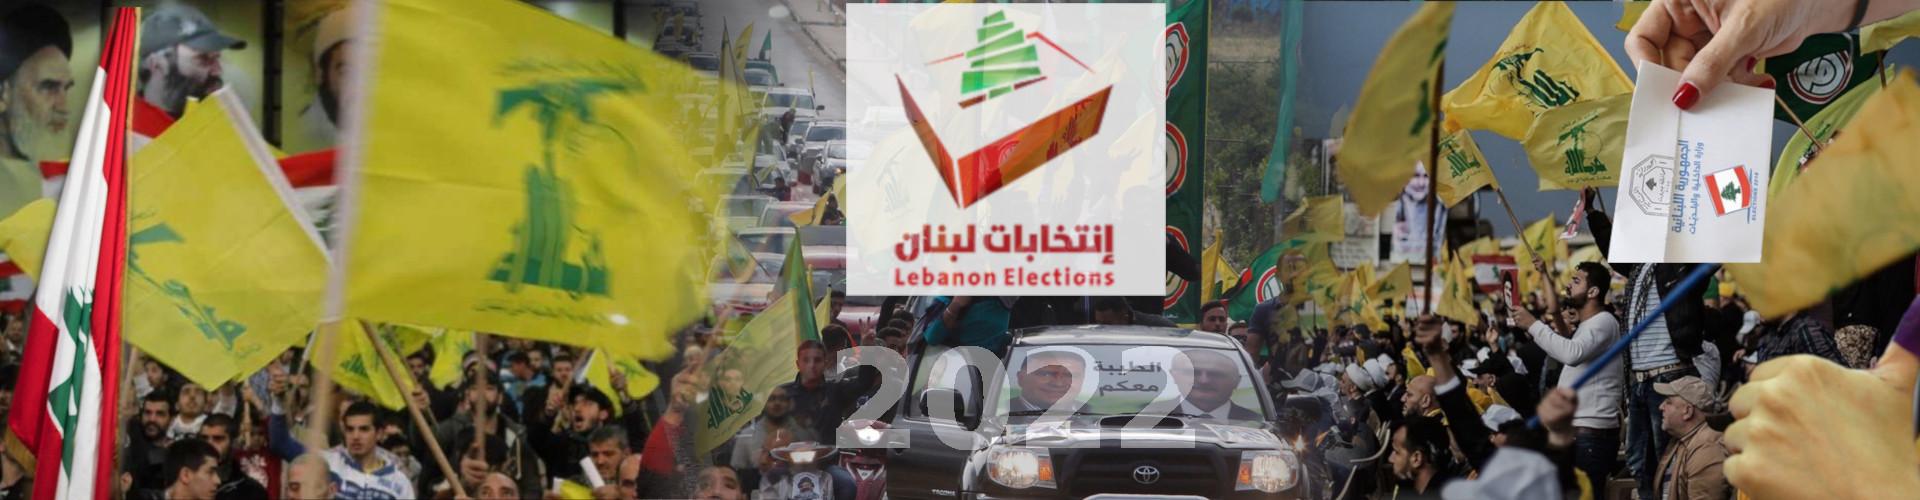 Hezbollah political terror candidates